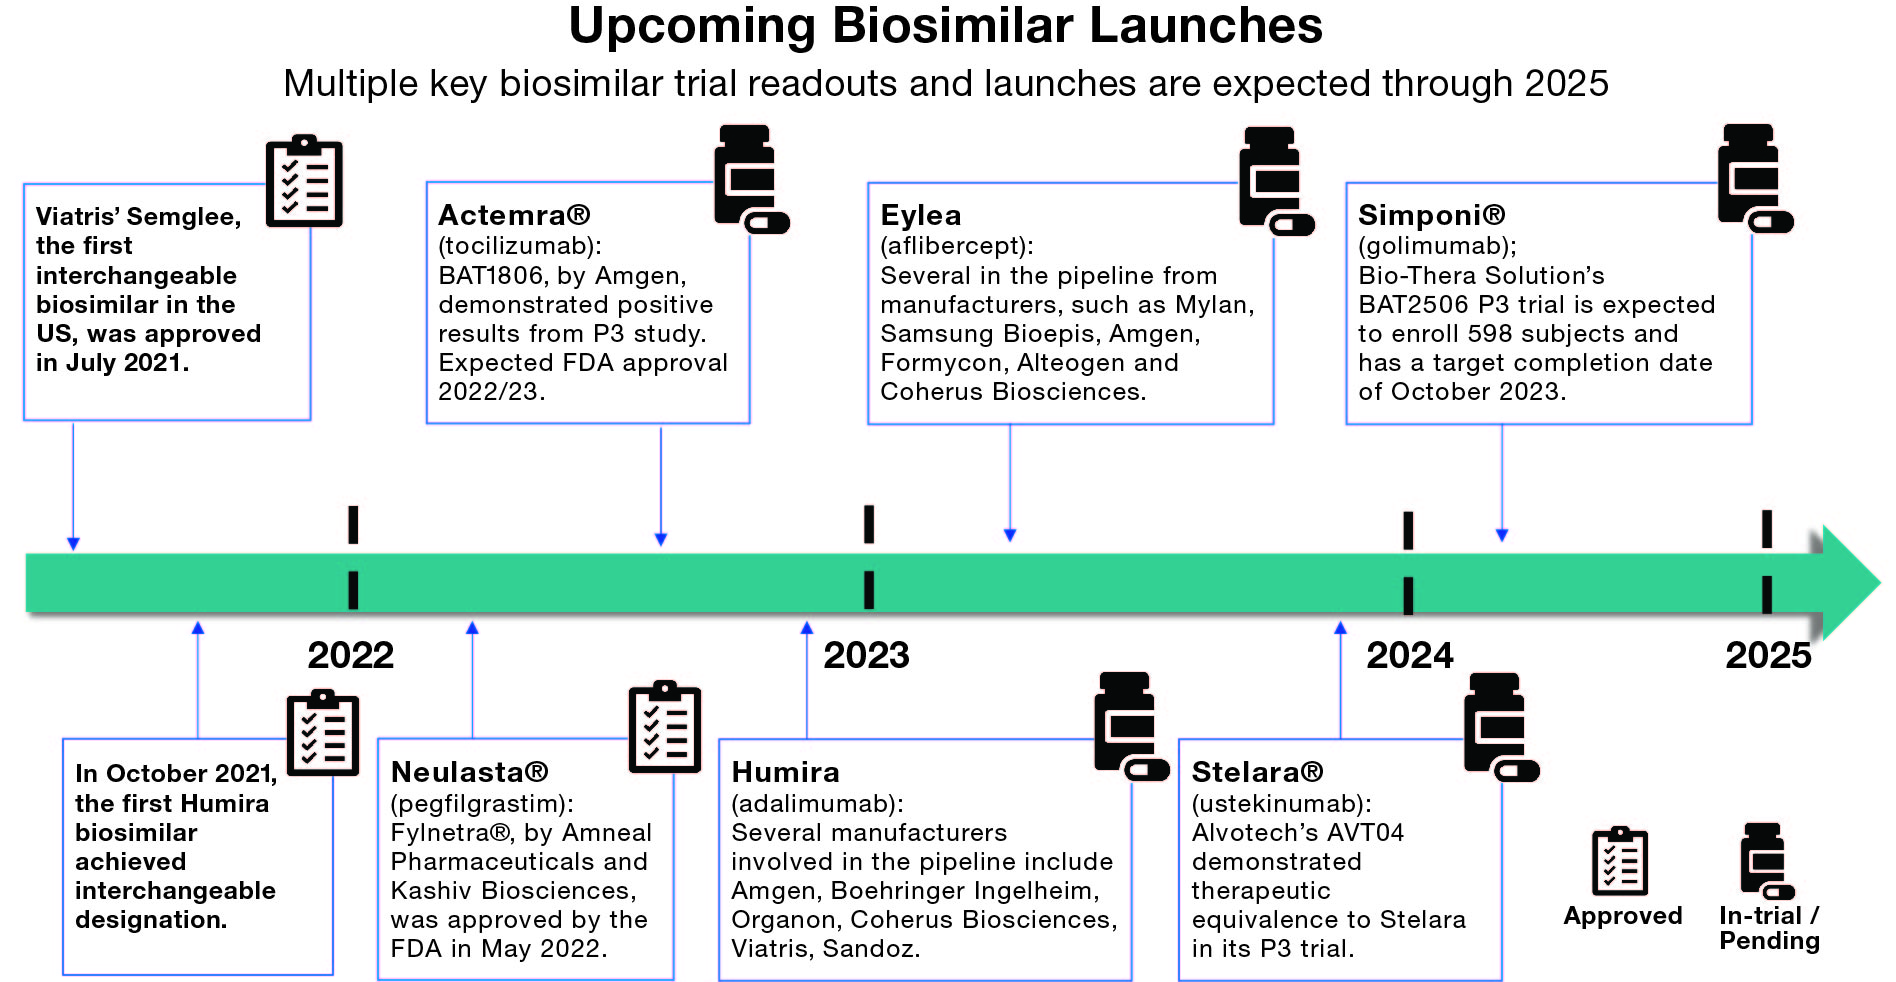 Upcoming biosimilar launches